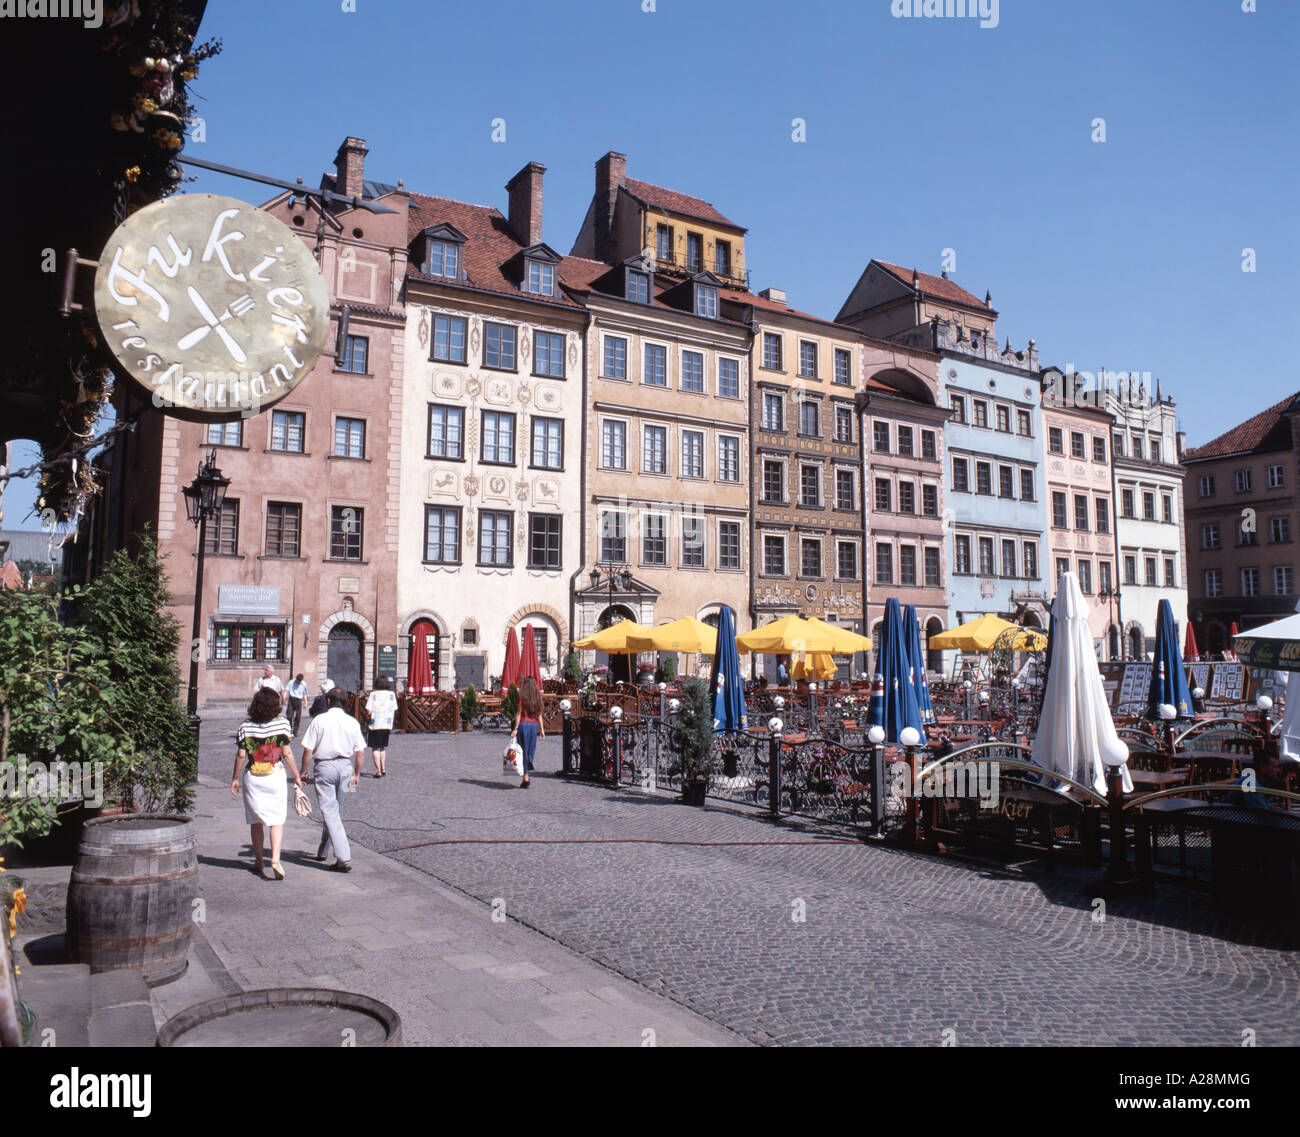 Market Square, Old Town, Warsaw (Warszawa), Masovia Province, Poland Stock Photo